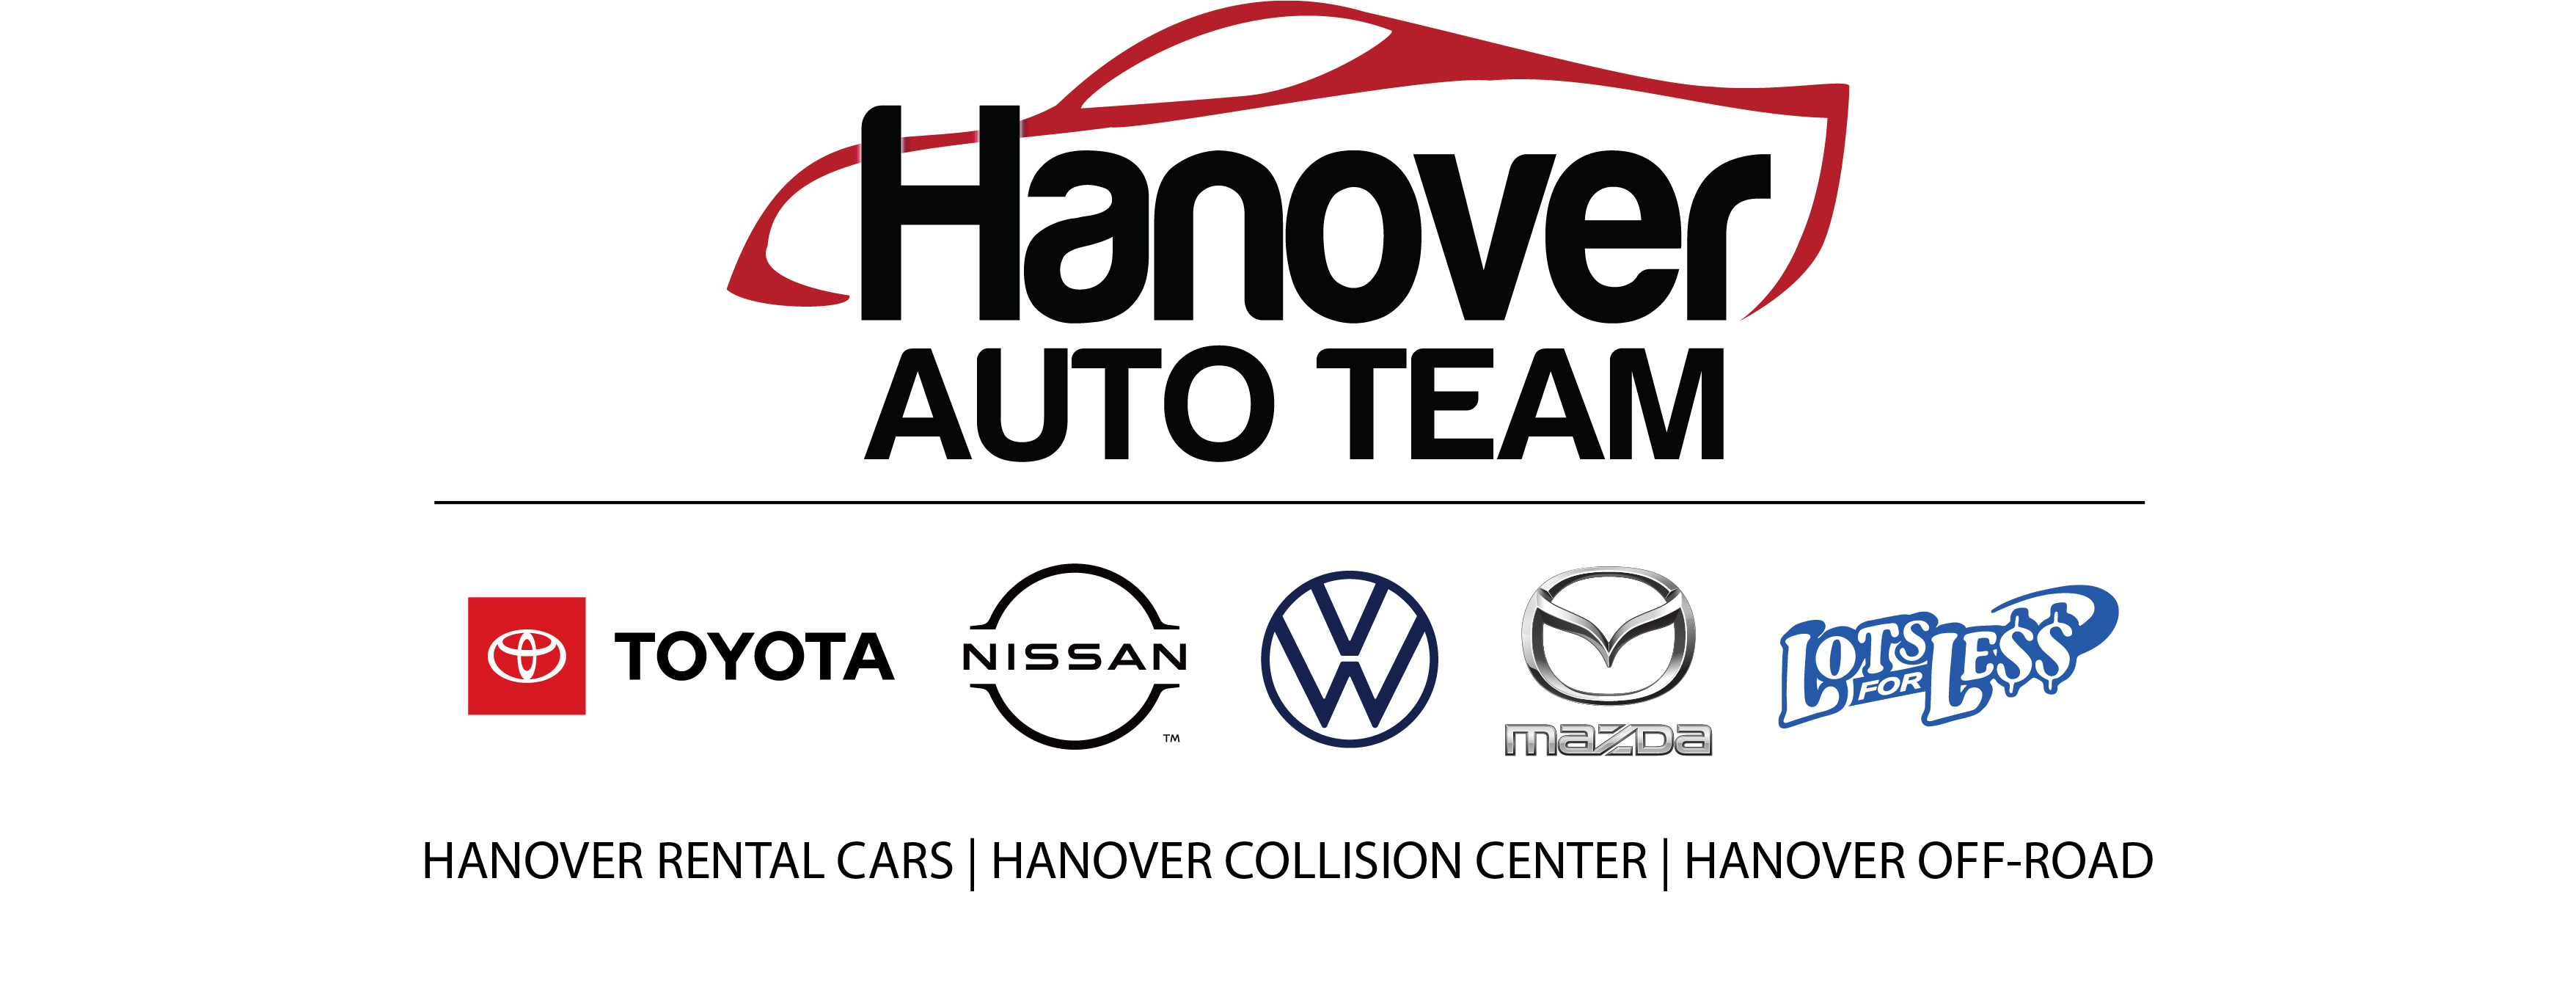 Hanover Auto Team